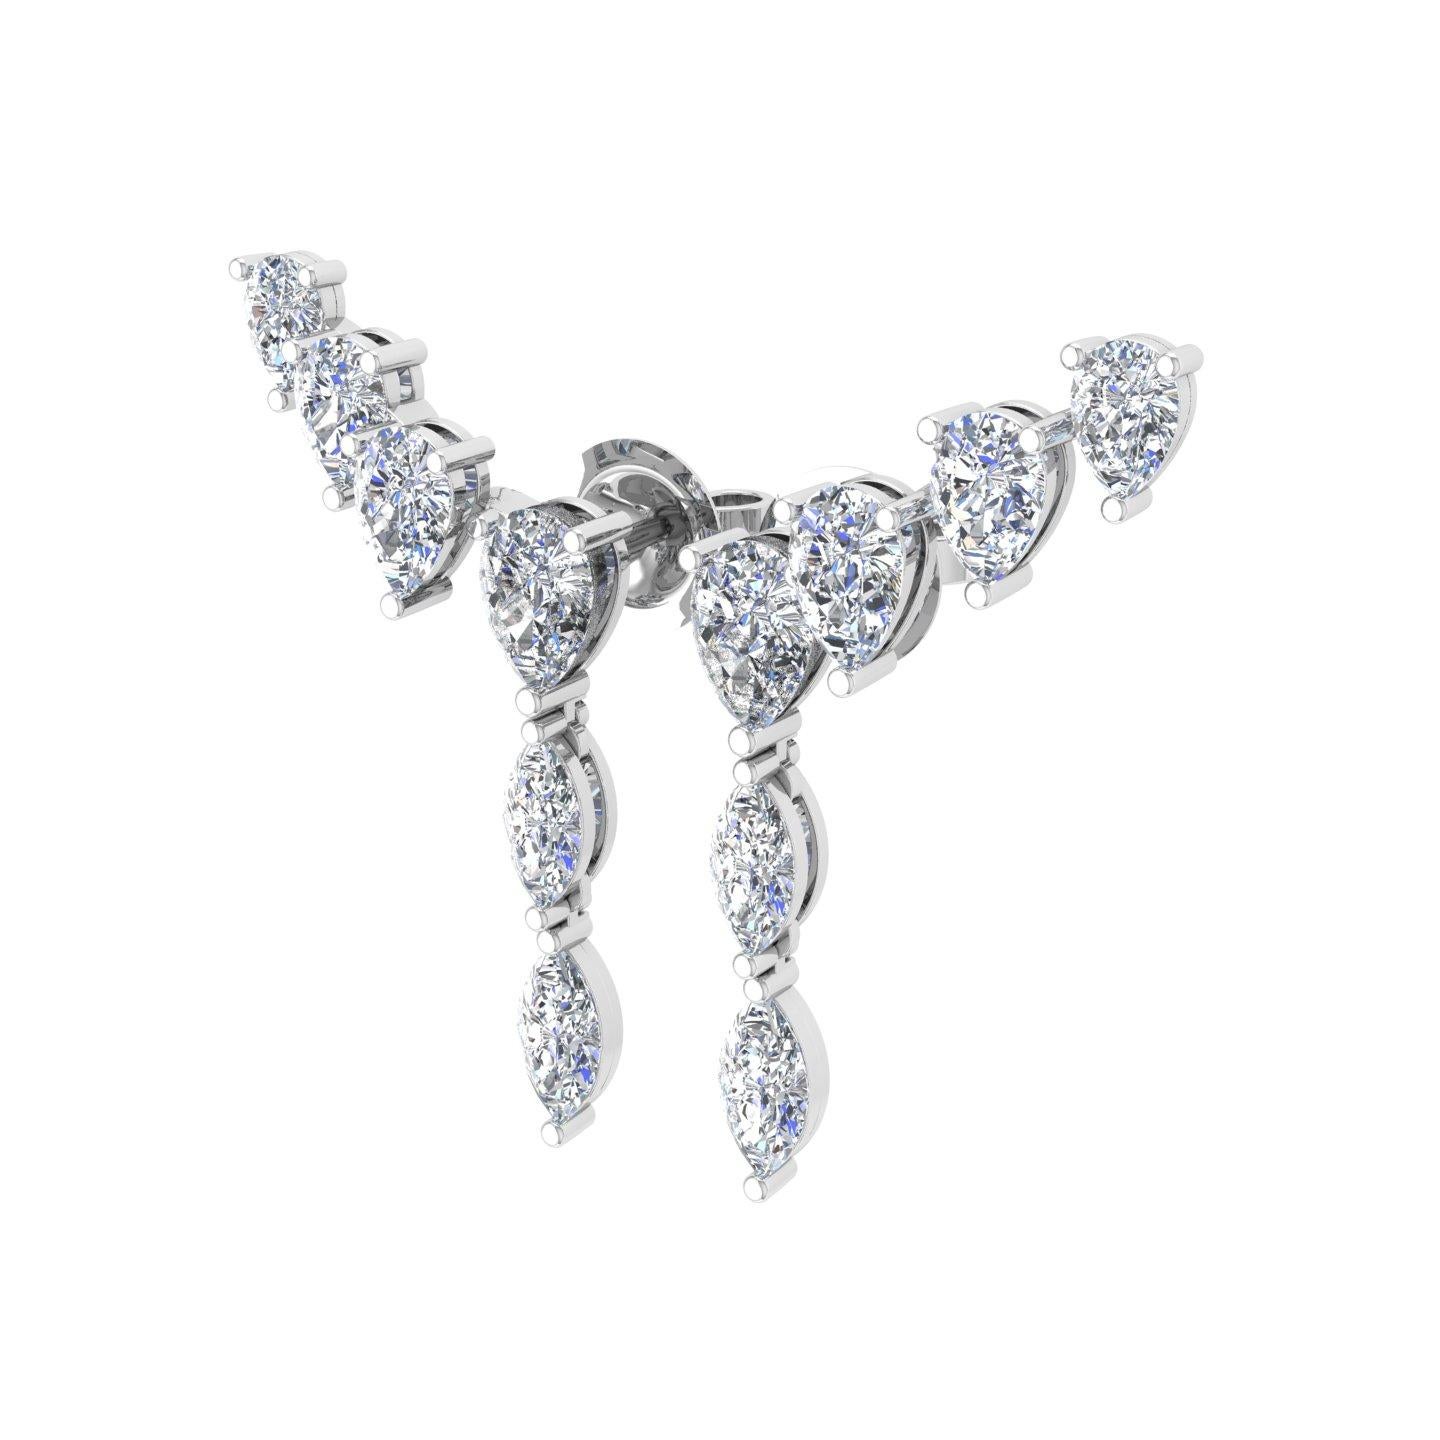 0.90 Carat Pear & Marquise Diamond Earrings 14 Karat White Gold Handmade Jewelry For Sale 4